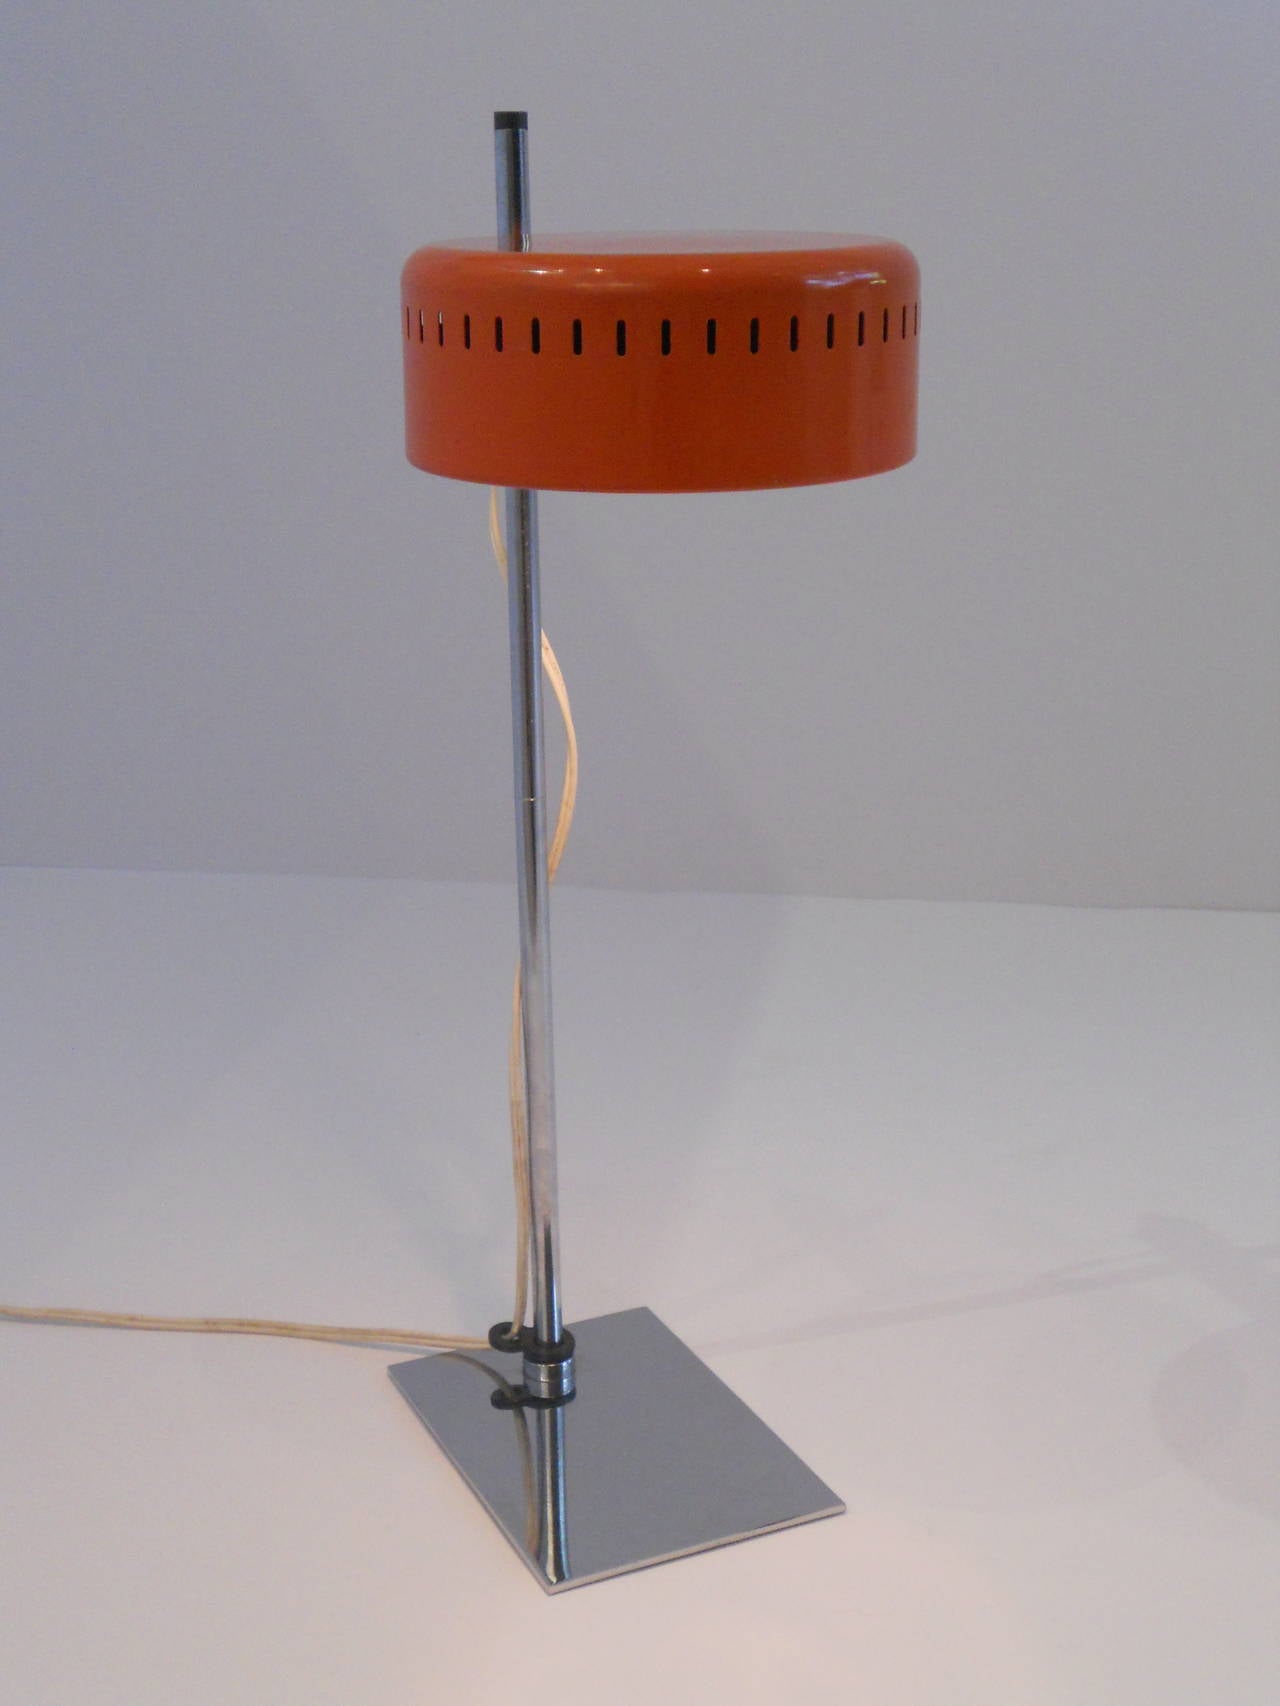 An original Robert Sonnemann desk lamp with and original orange metal shade and chrome base. Lamp retains the original maker's tag.